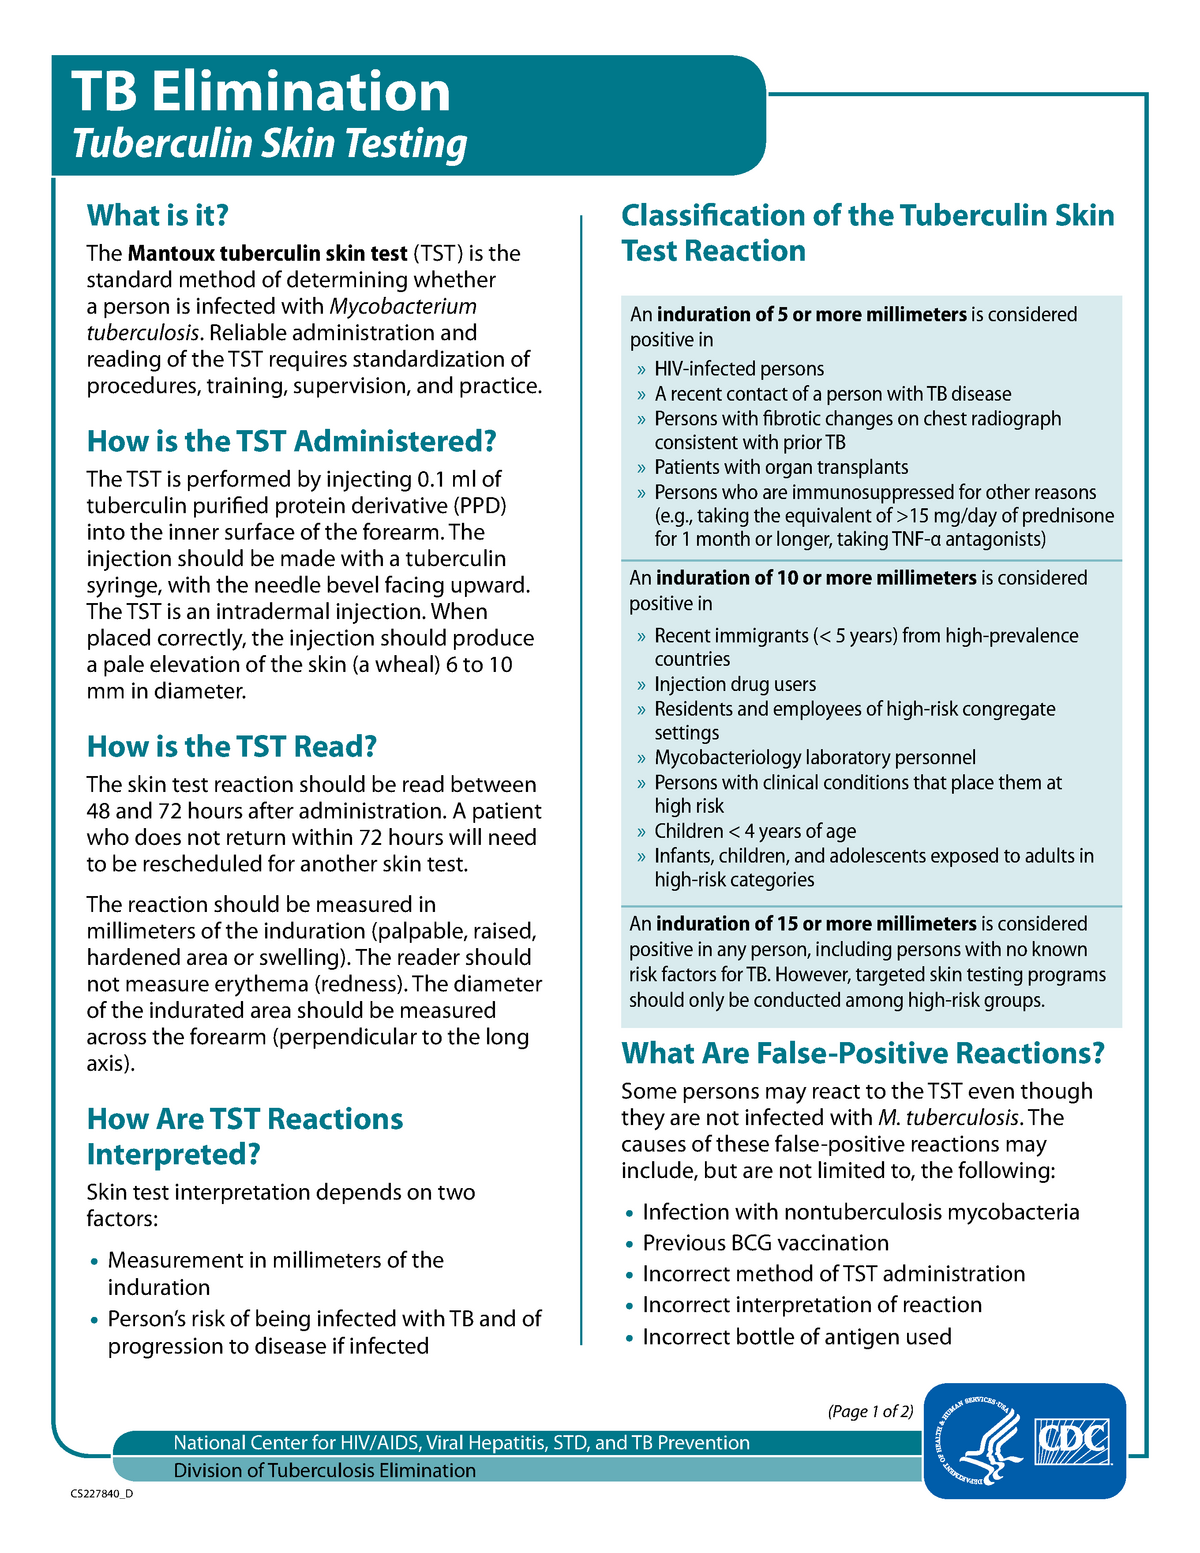 tuberculin-skin-testing-cdc-national-center-for-hiv-aids-viral